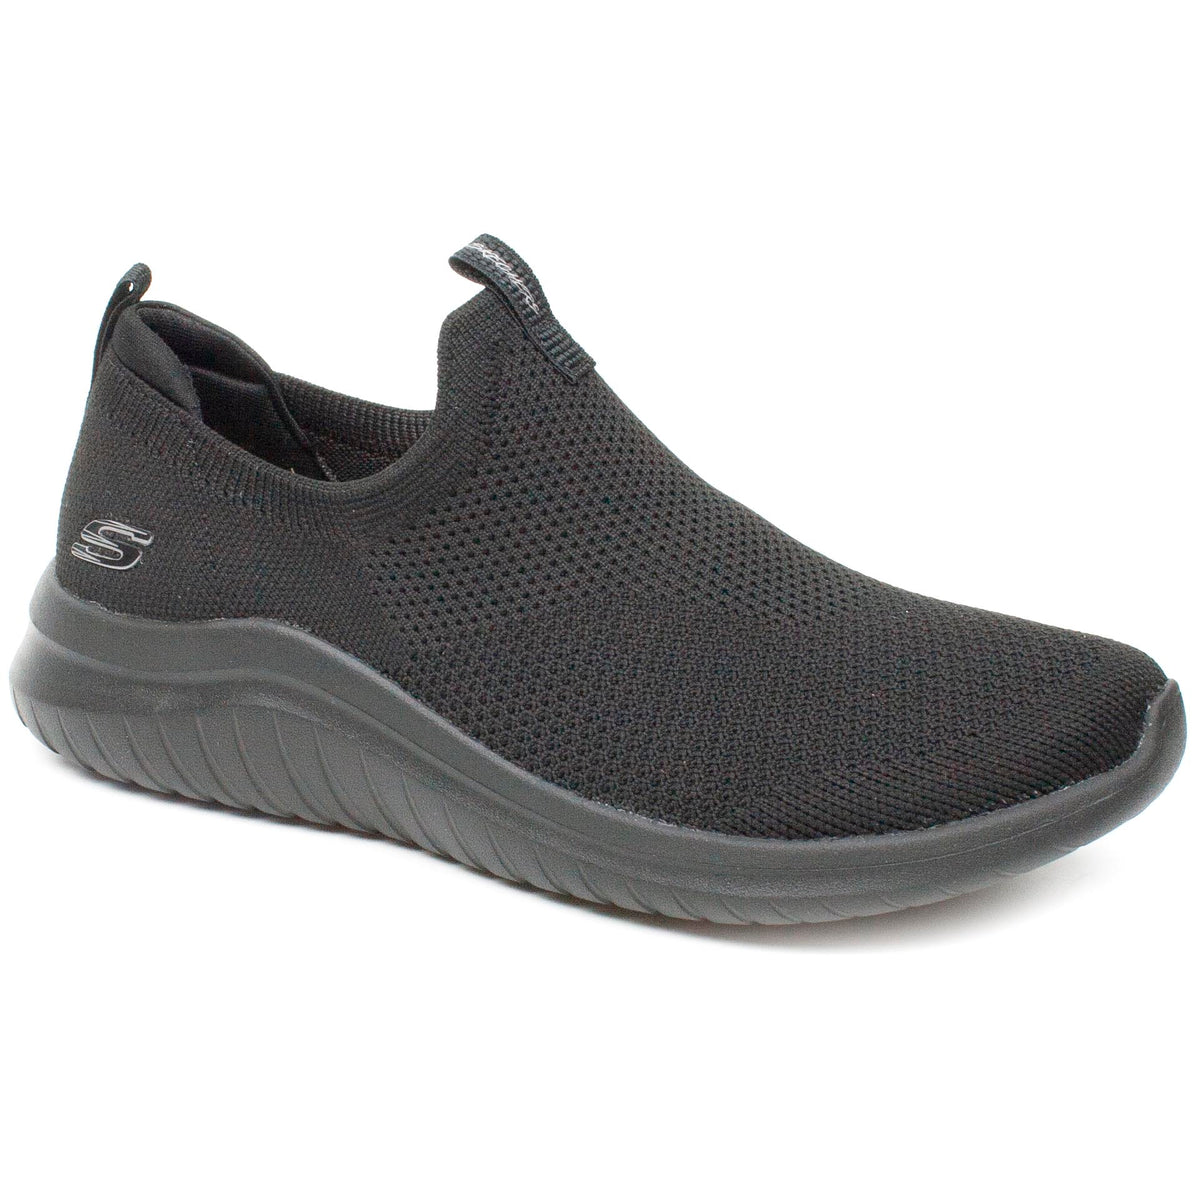 Skechers pantofi dama sport 149089 negru ID2623-NG